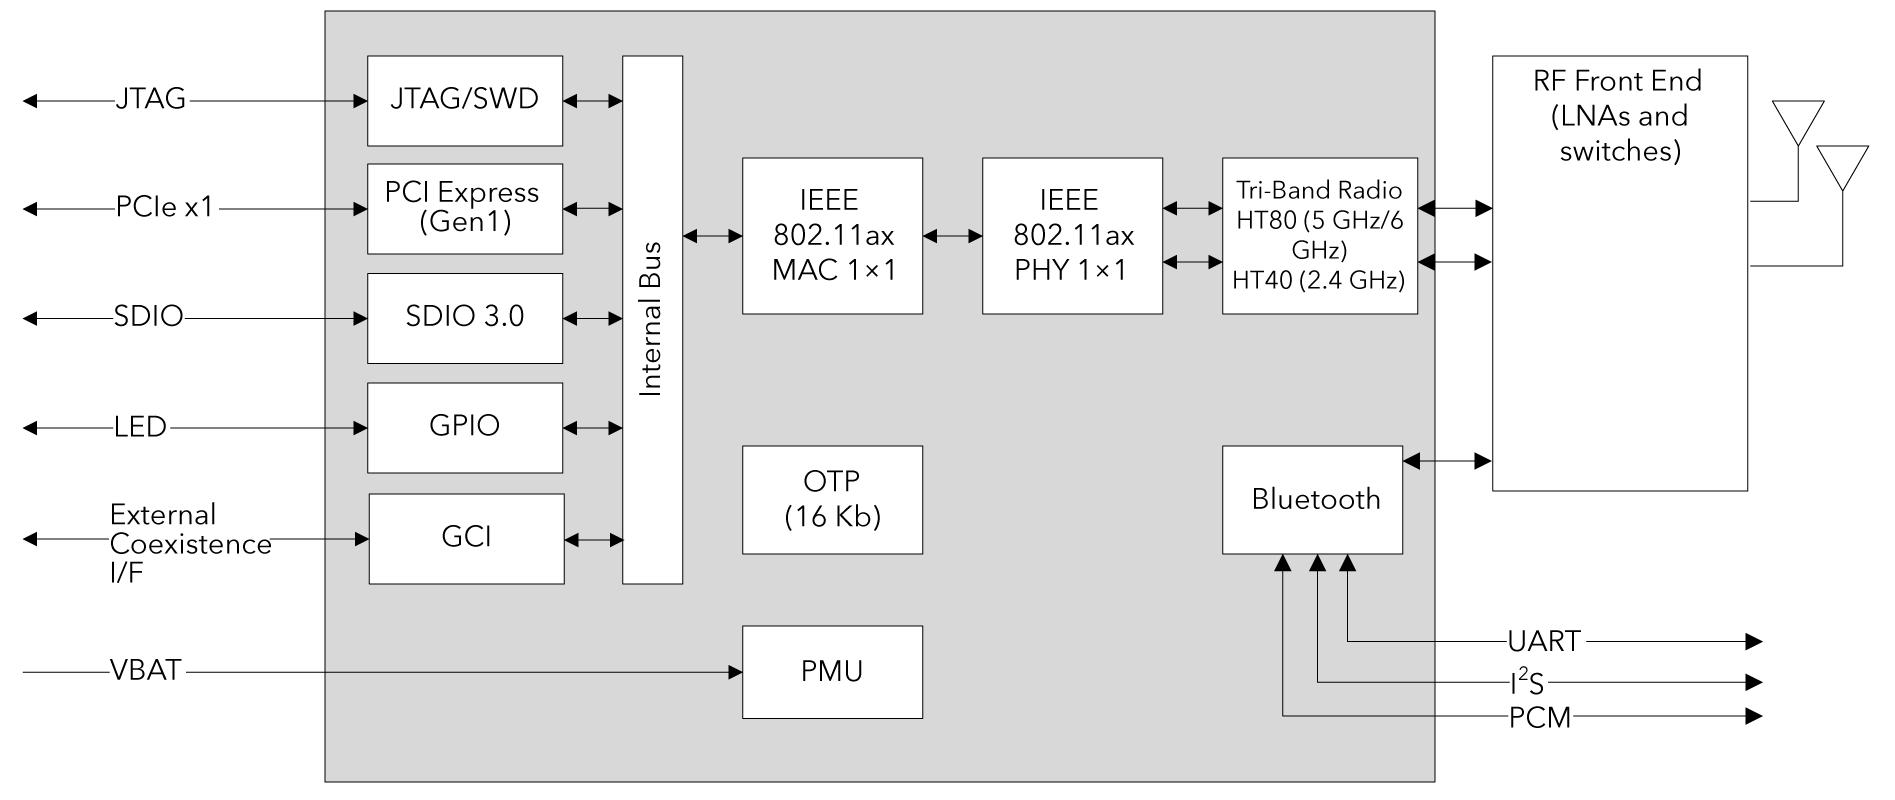 VS640 block diagram